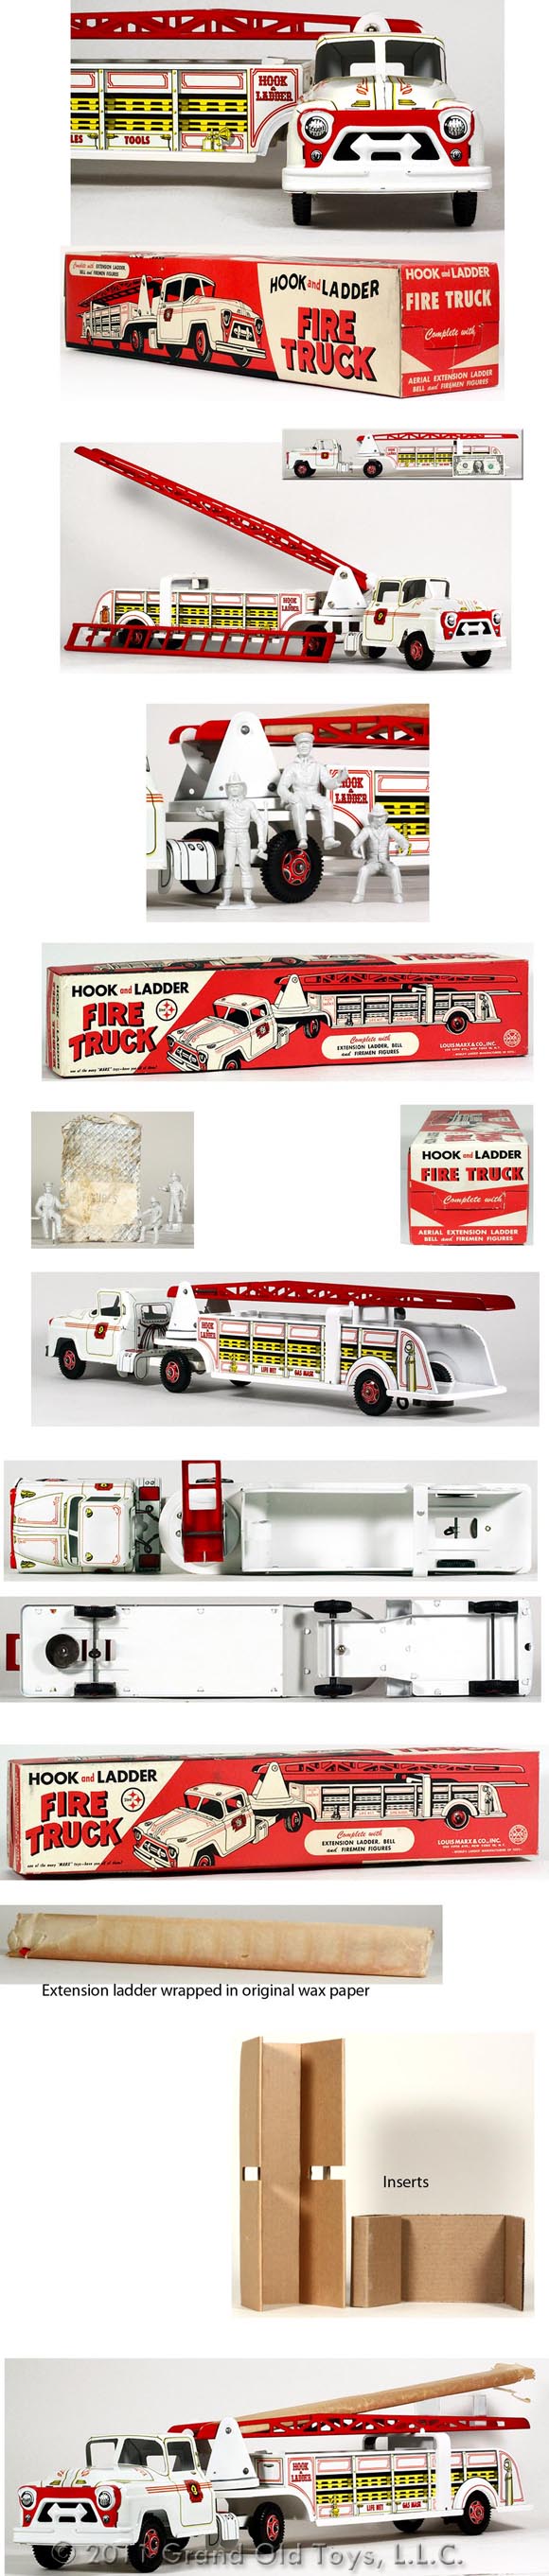 1959 Marx White Hook Ladder Fire Truck In Original Box